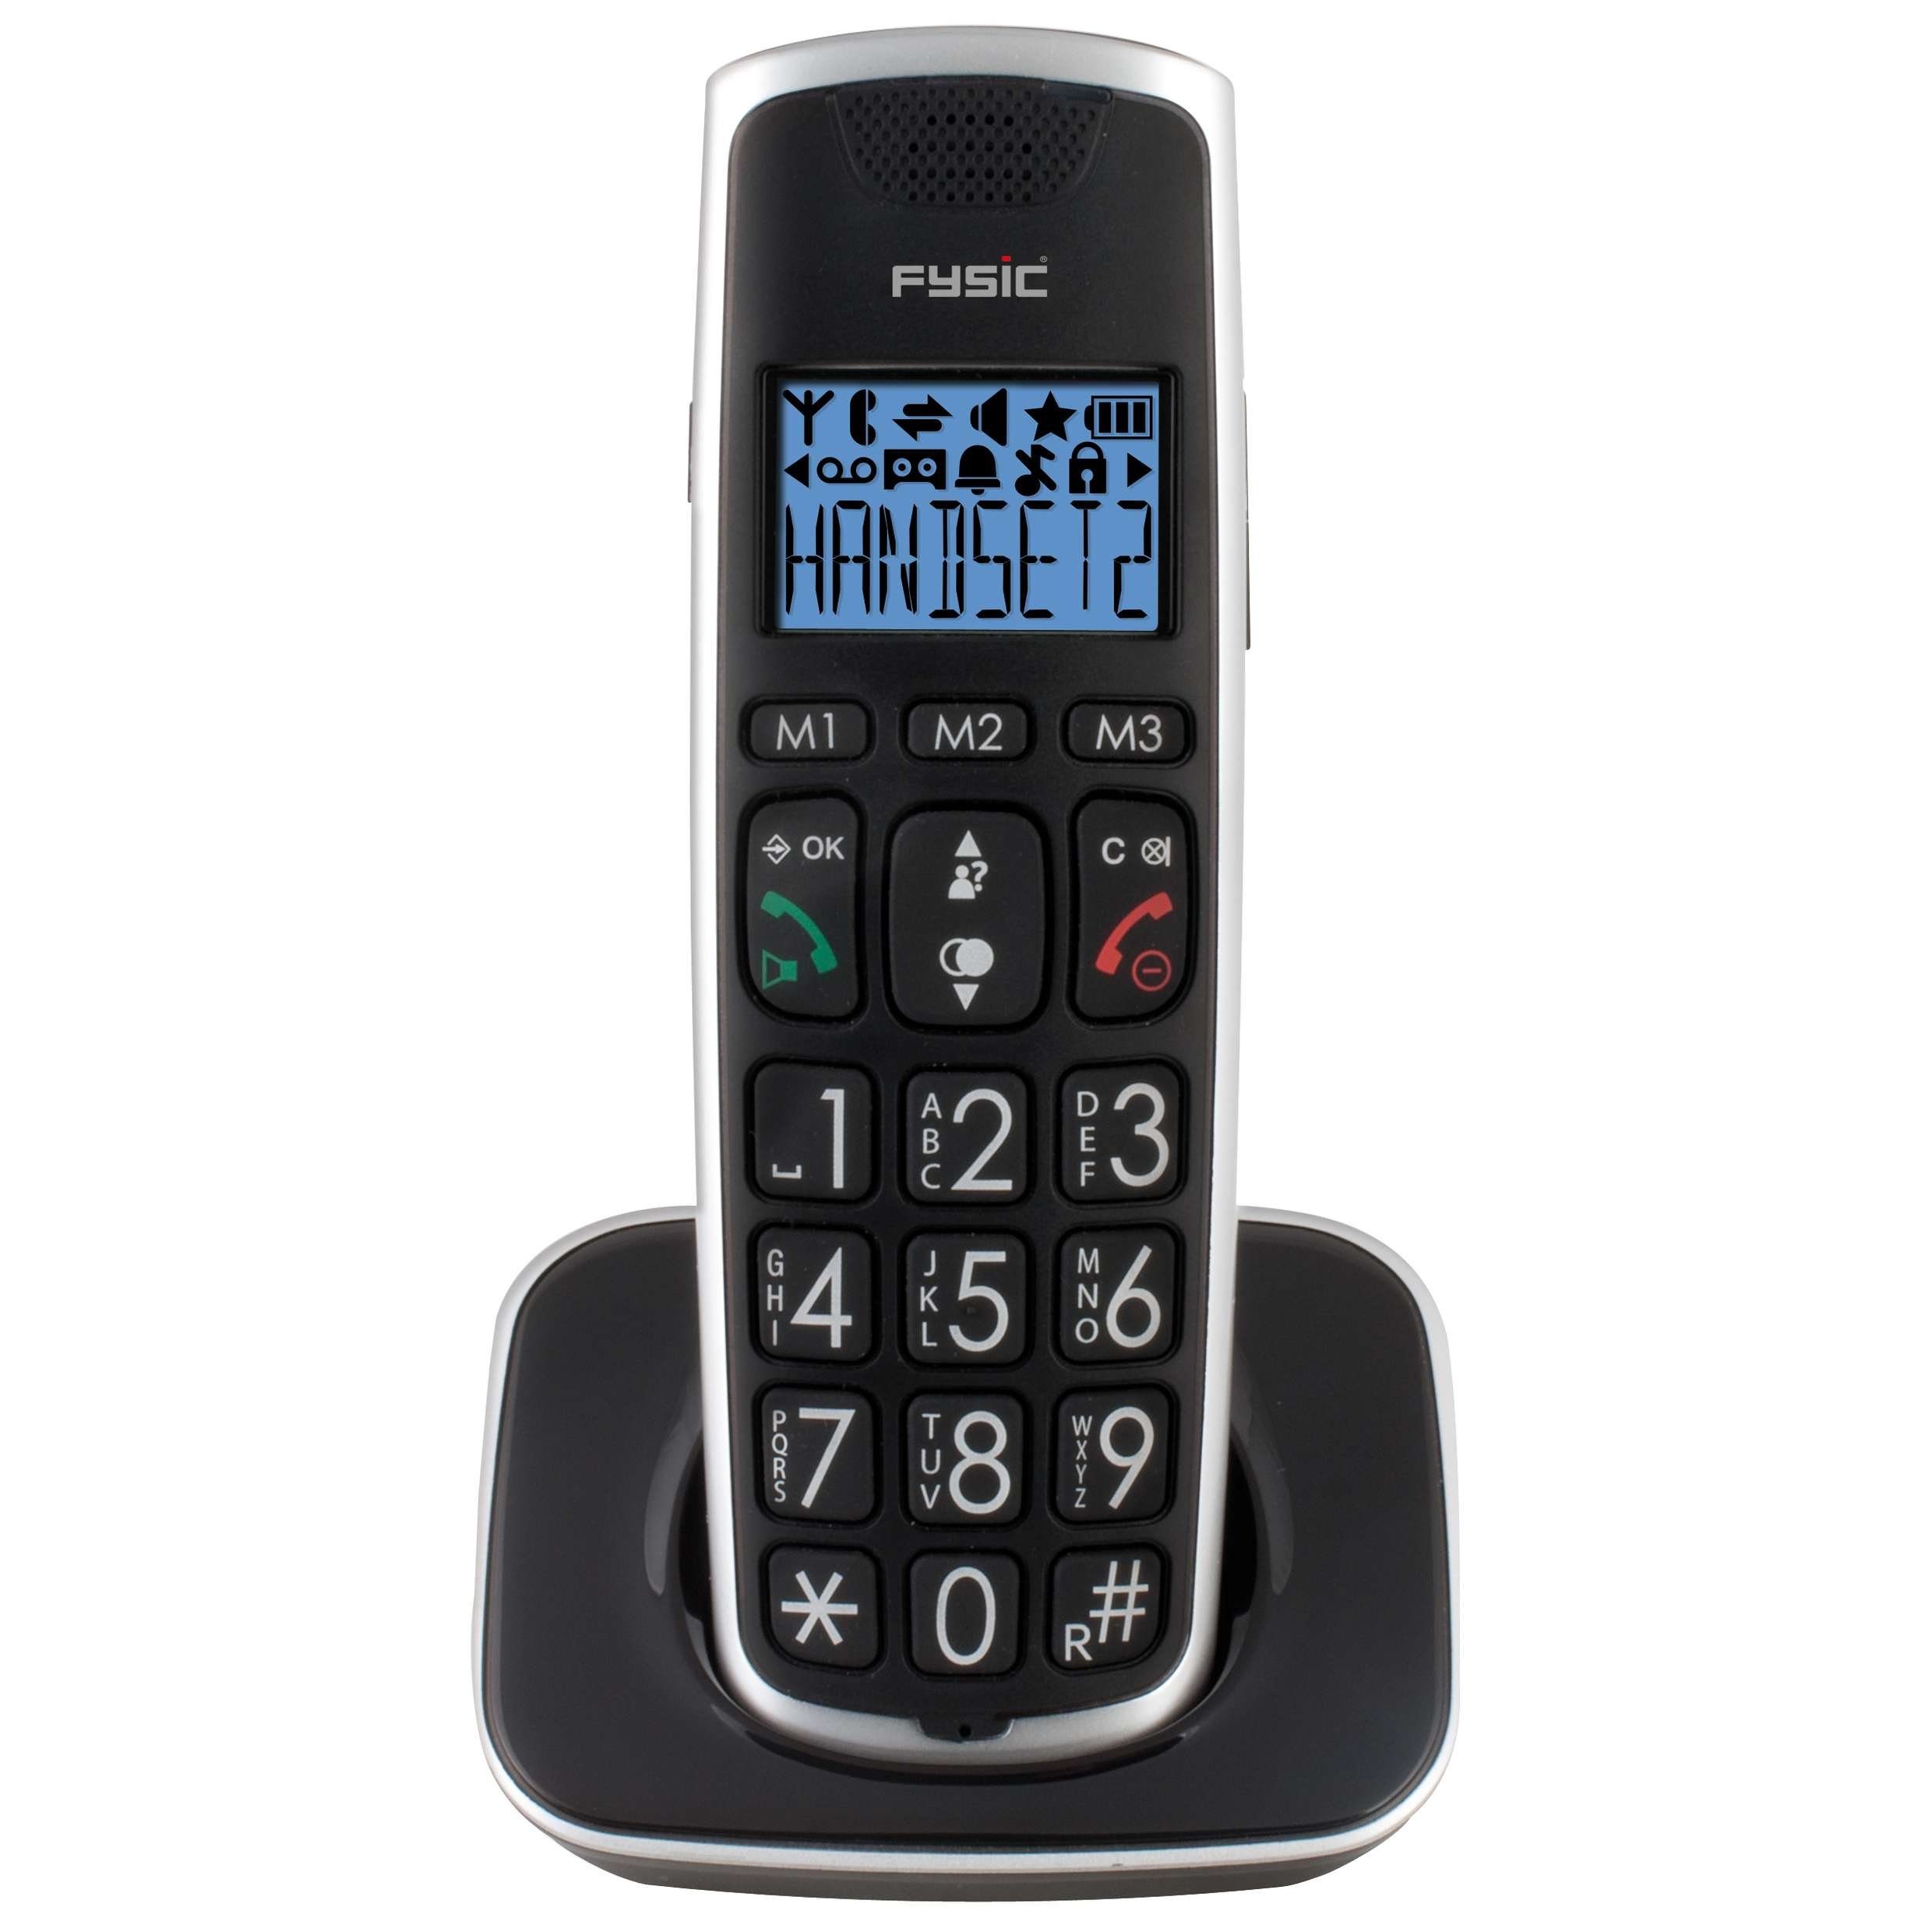 großes Schnurloses DECT-Telefon große Display) FX-6020 (Mobilteile: Fysic Tasten, Hörgerätkompatibel, 2,